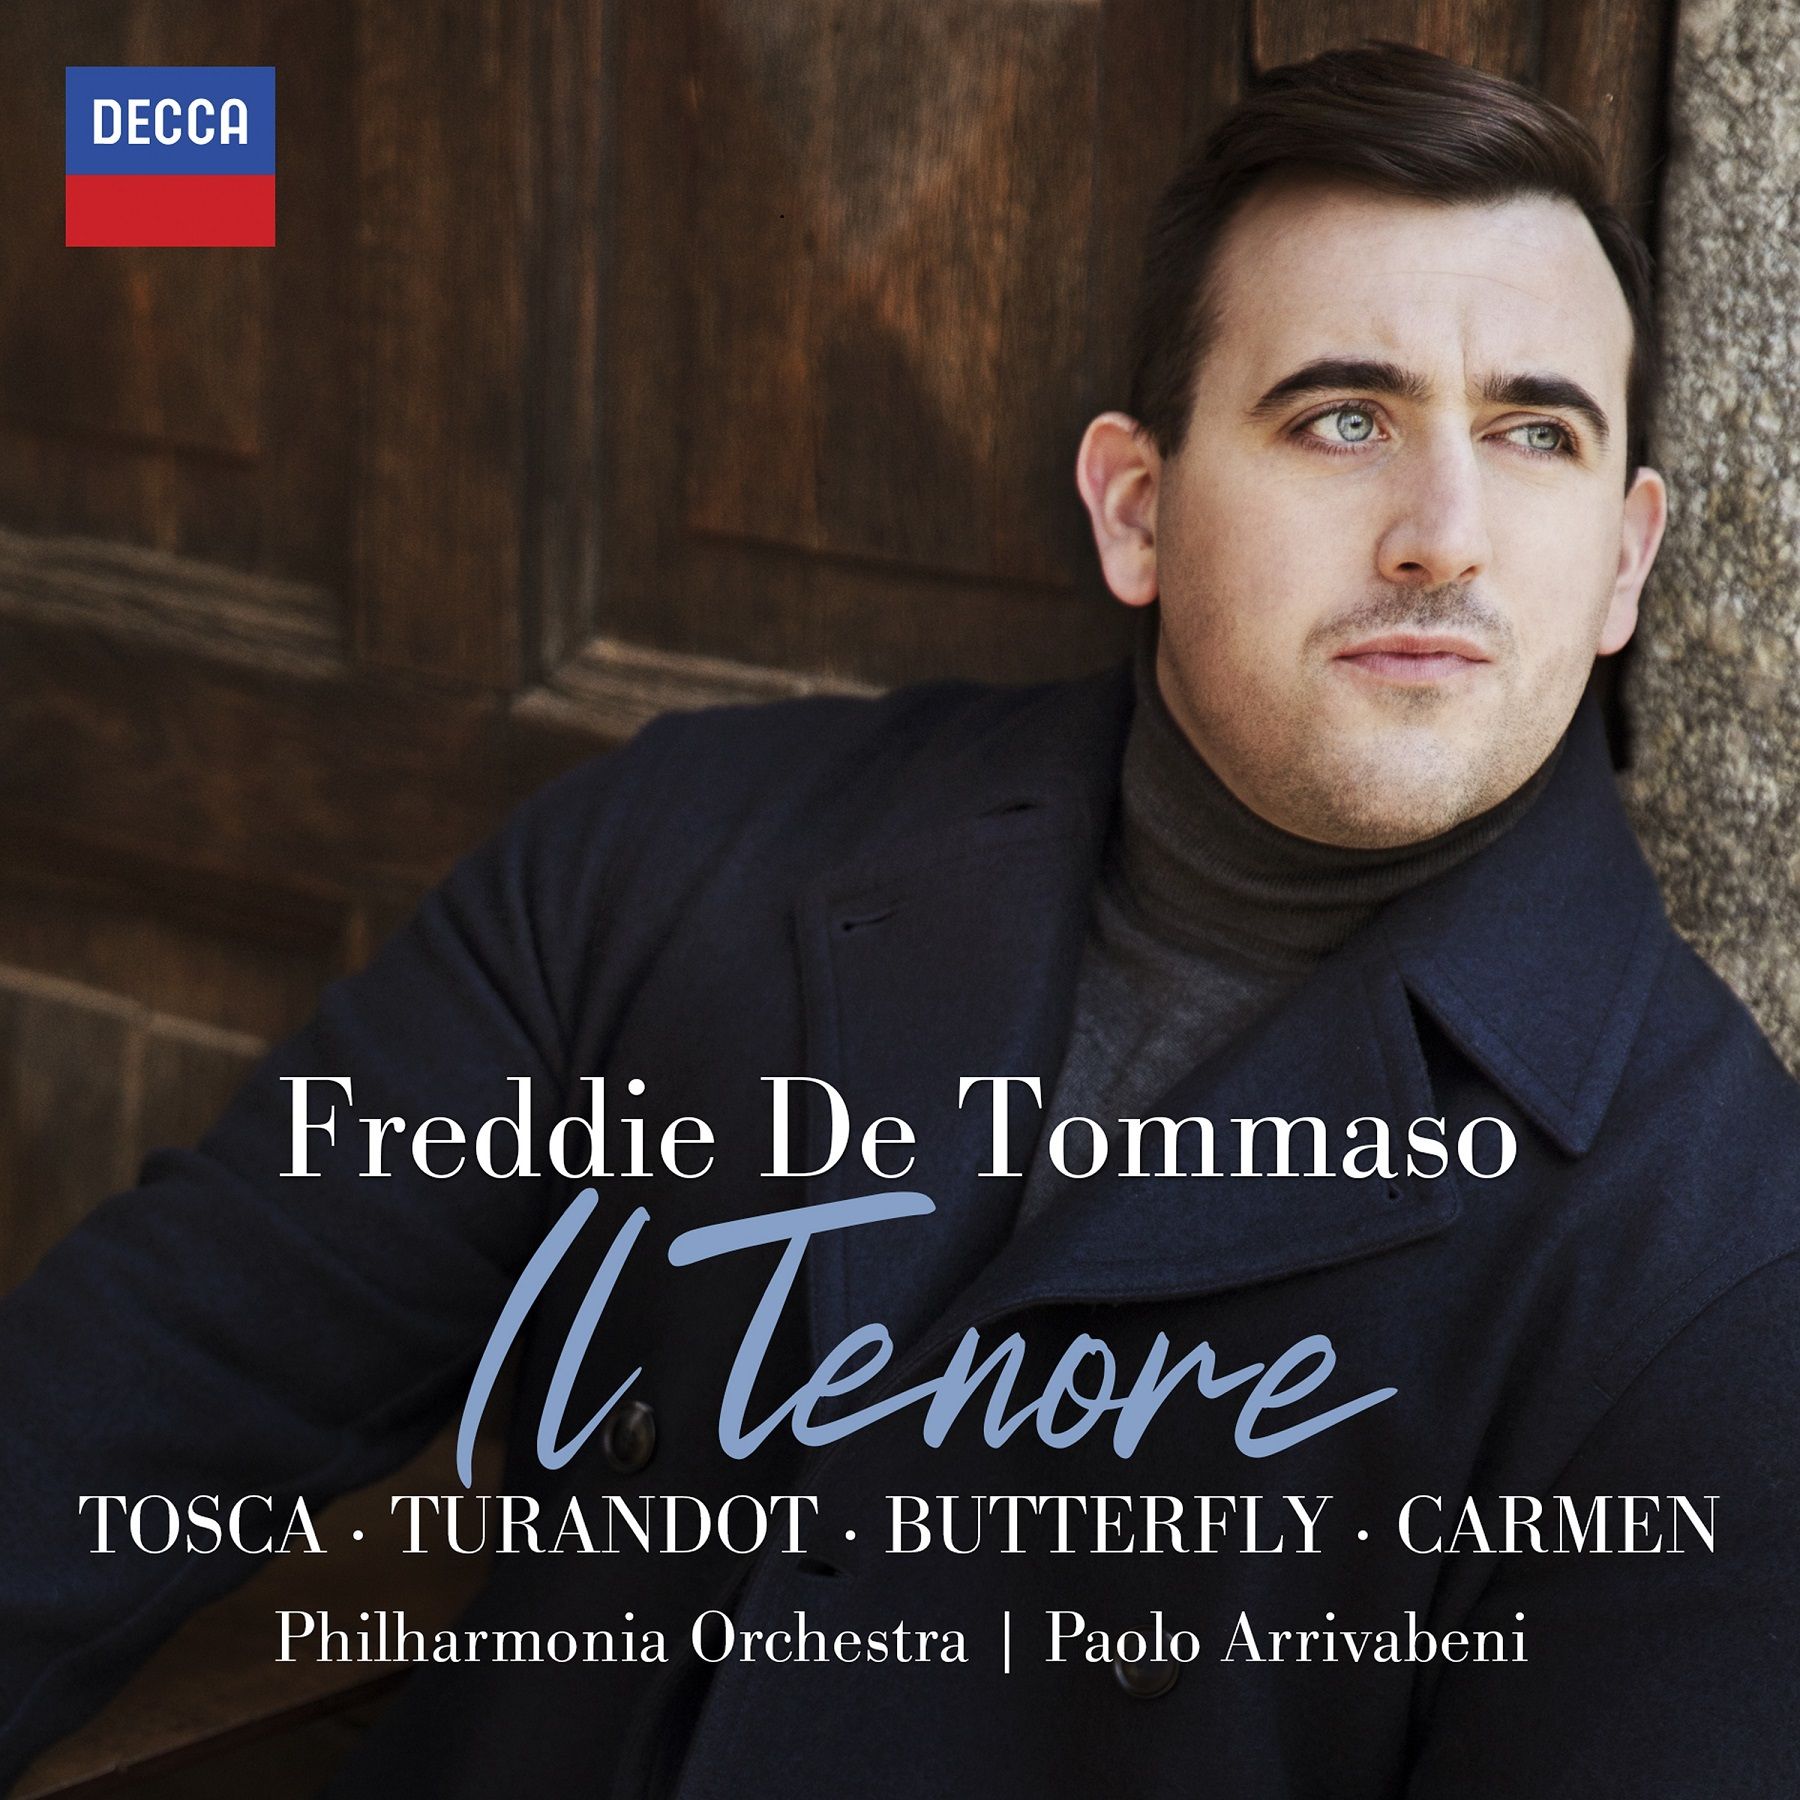 News Item: Freddie De Tommaso's forthcoming album announced